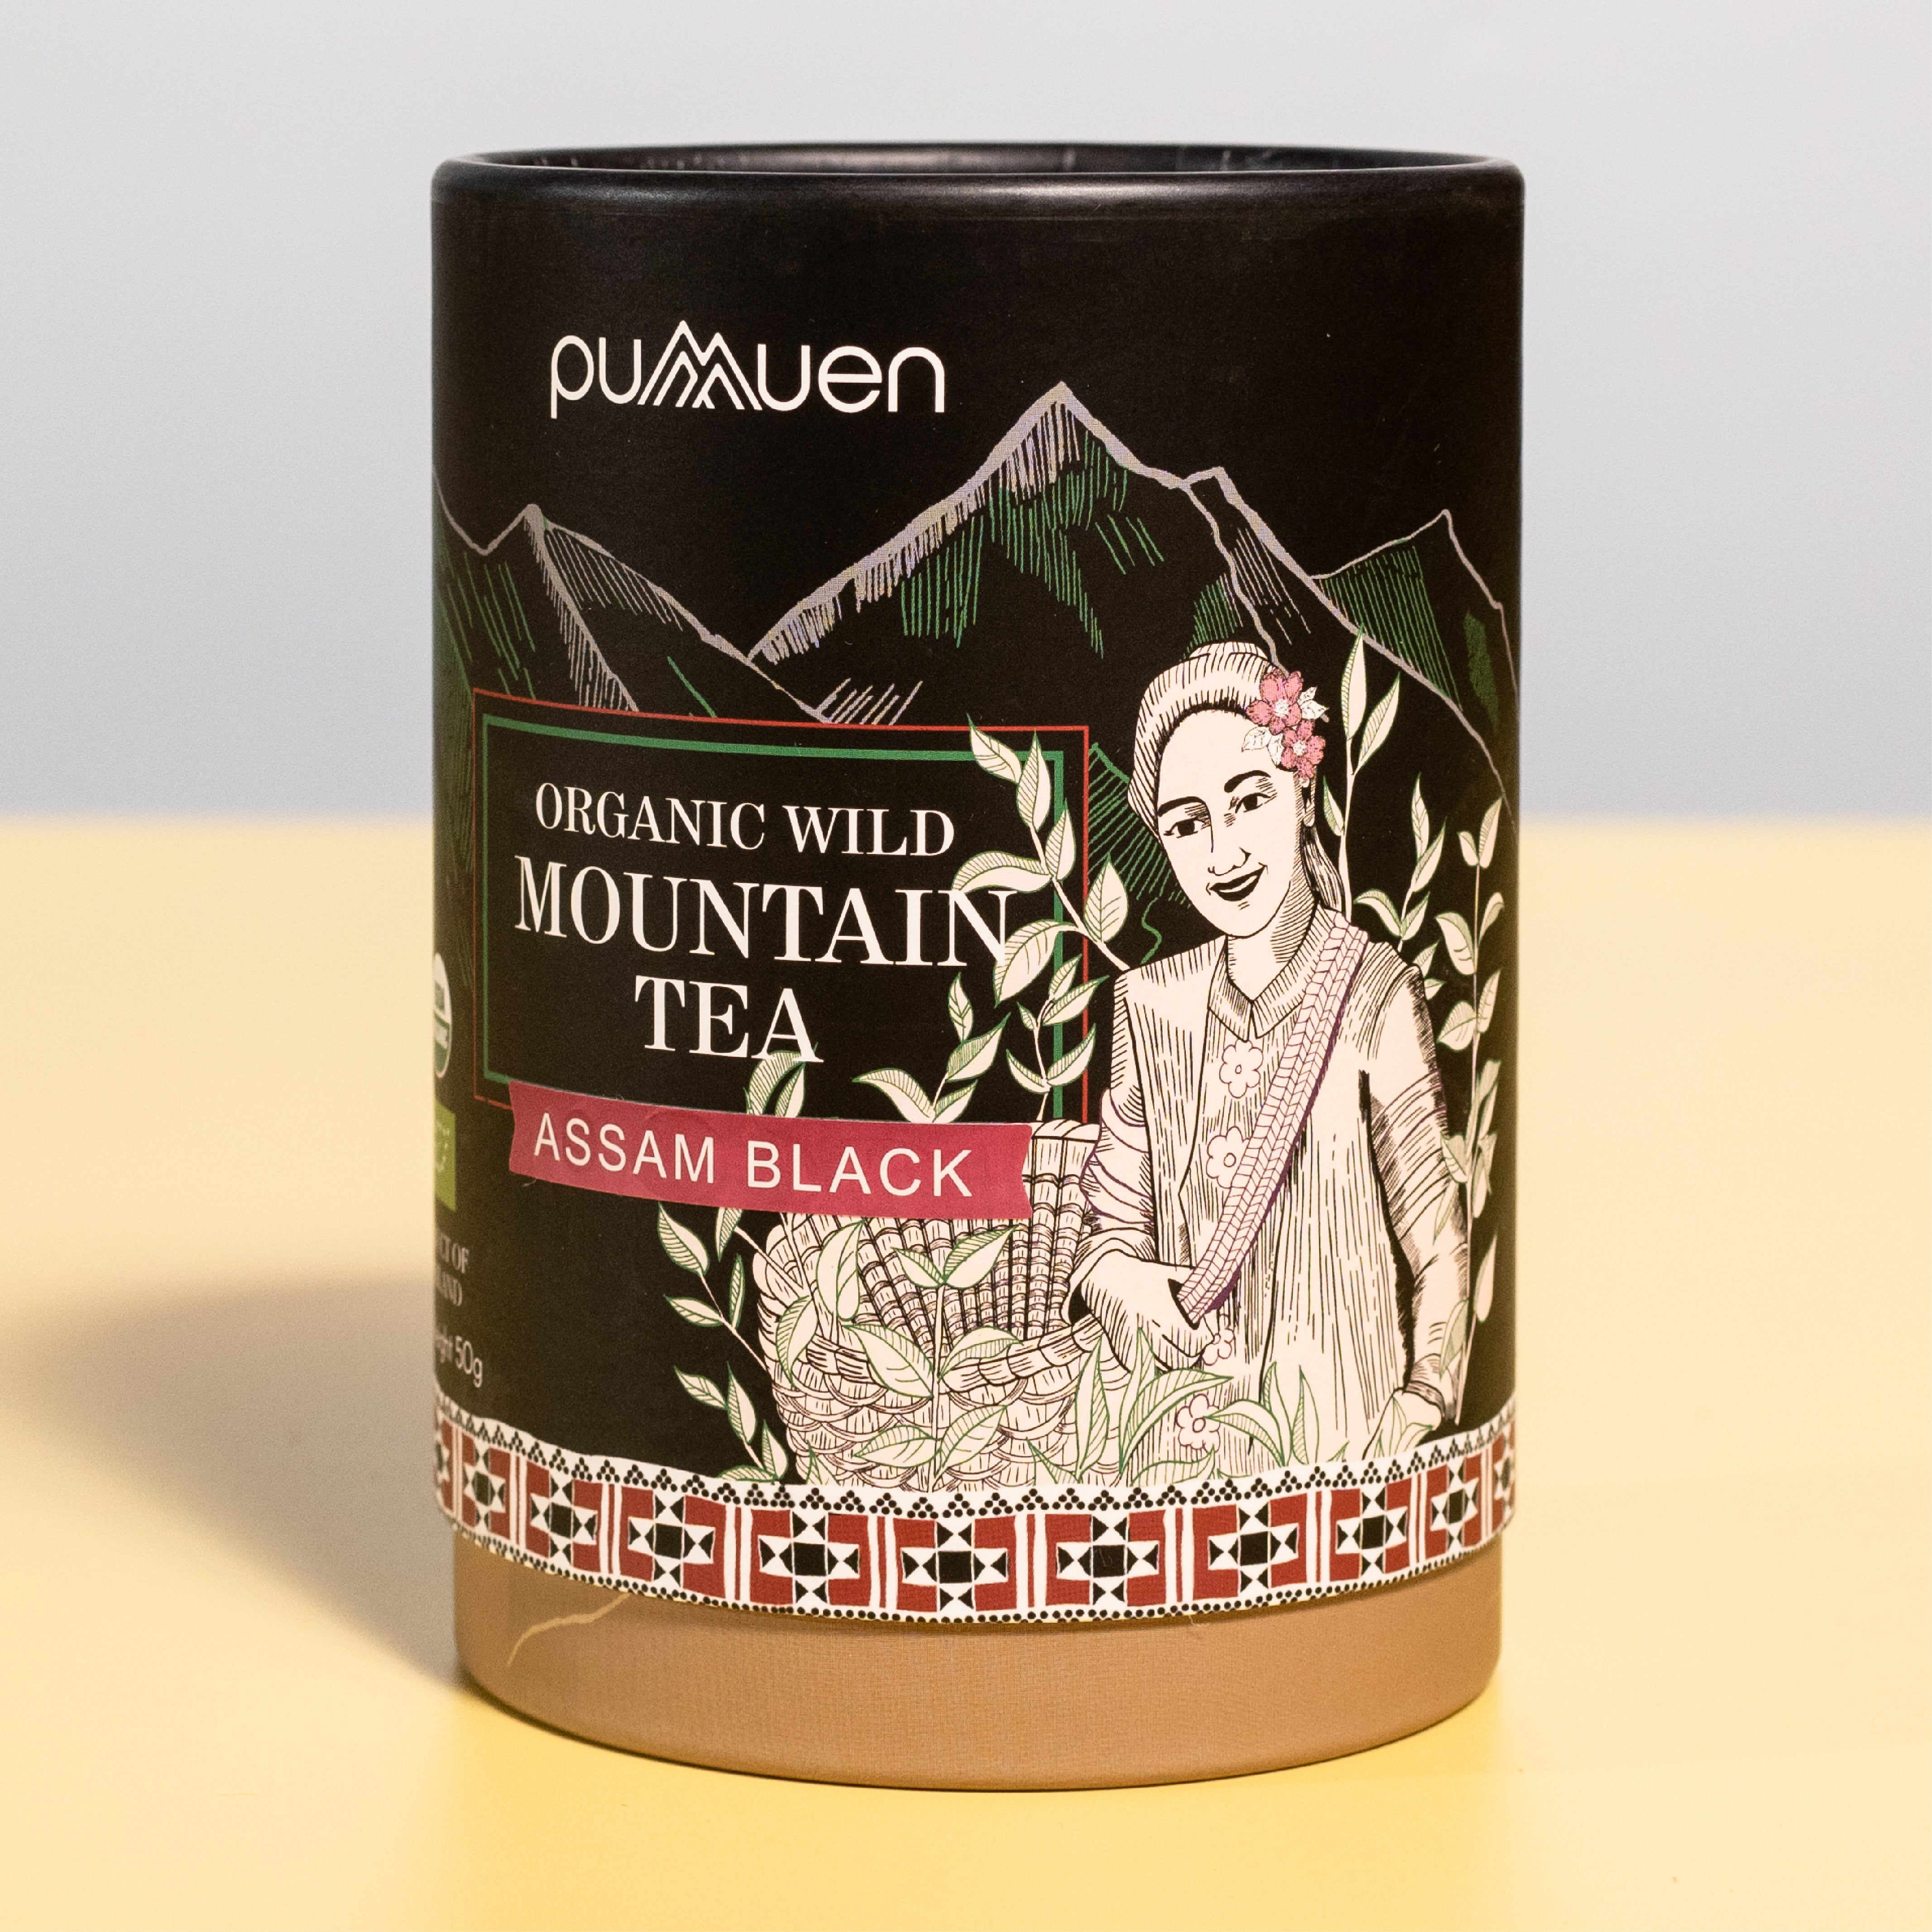 Pumuen organic wild grow mountain tea - Assam Black